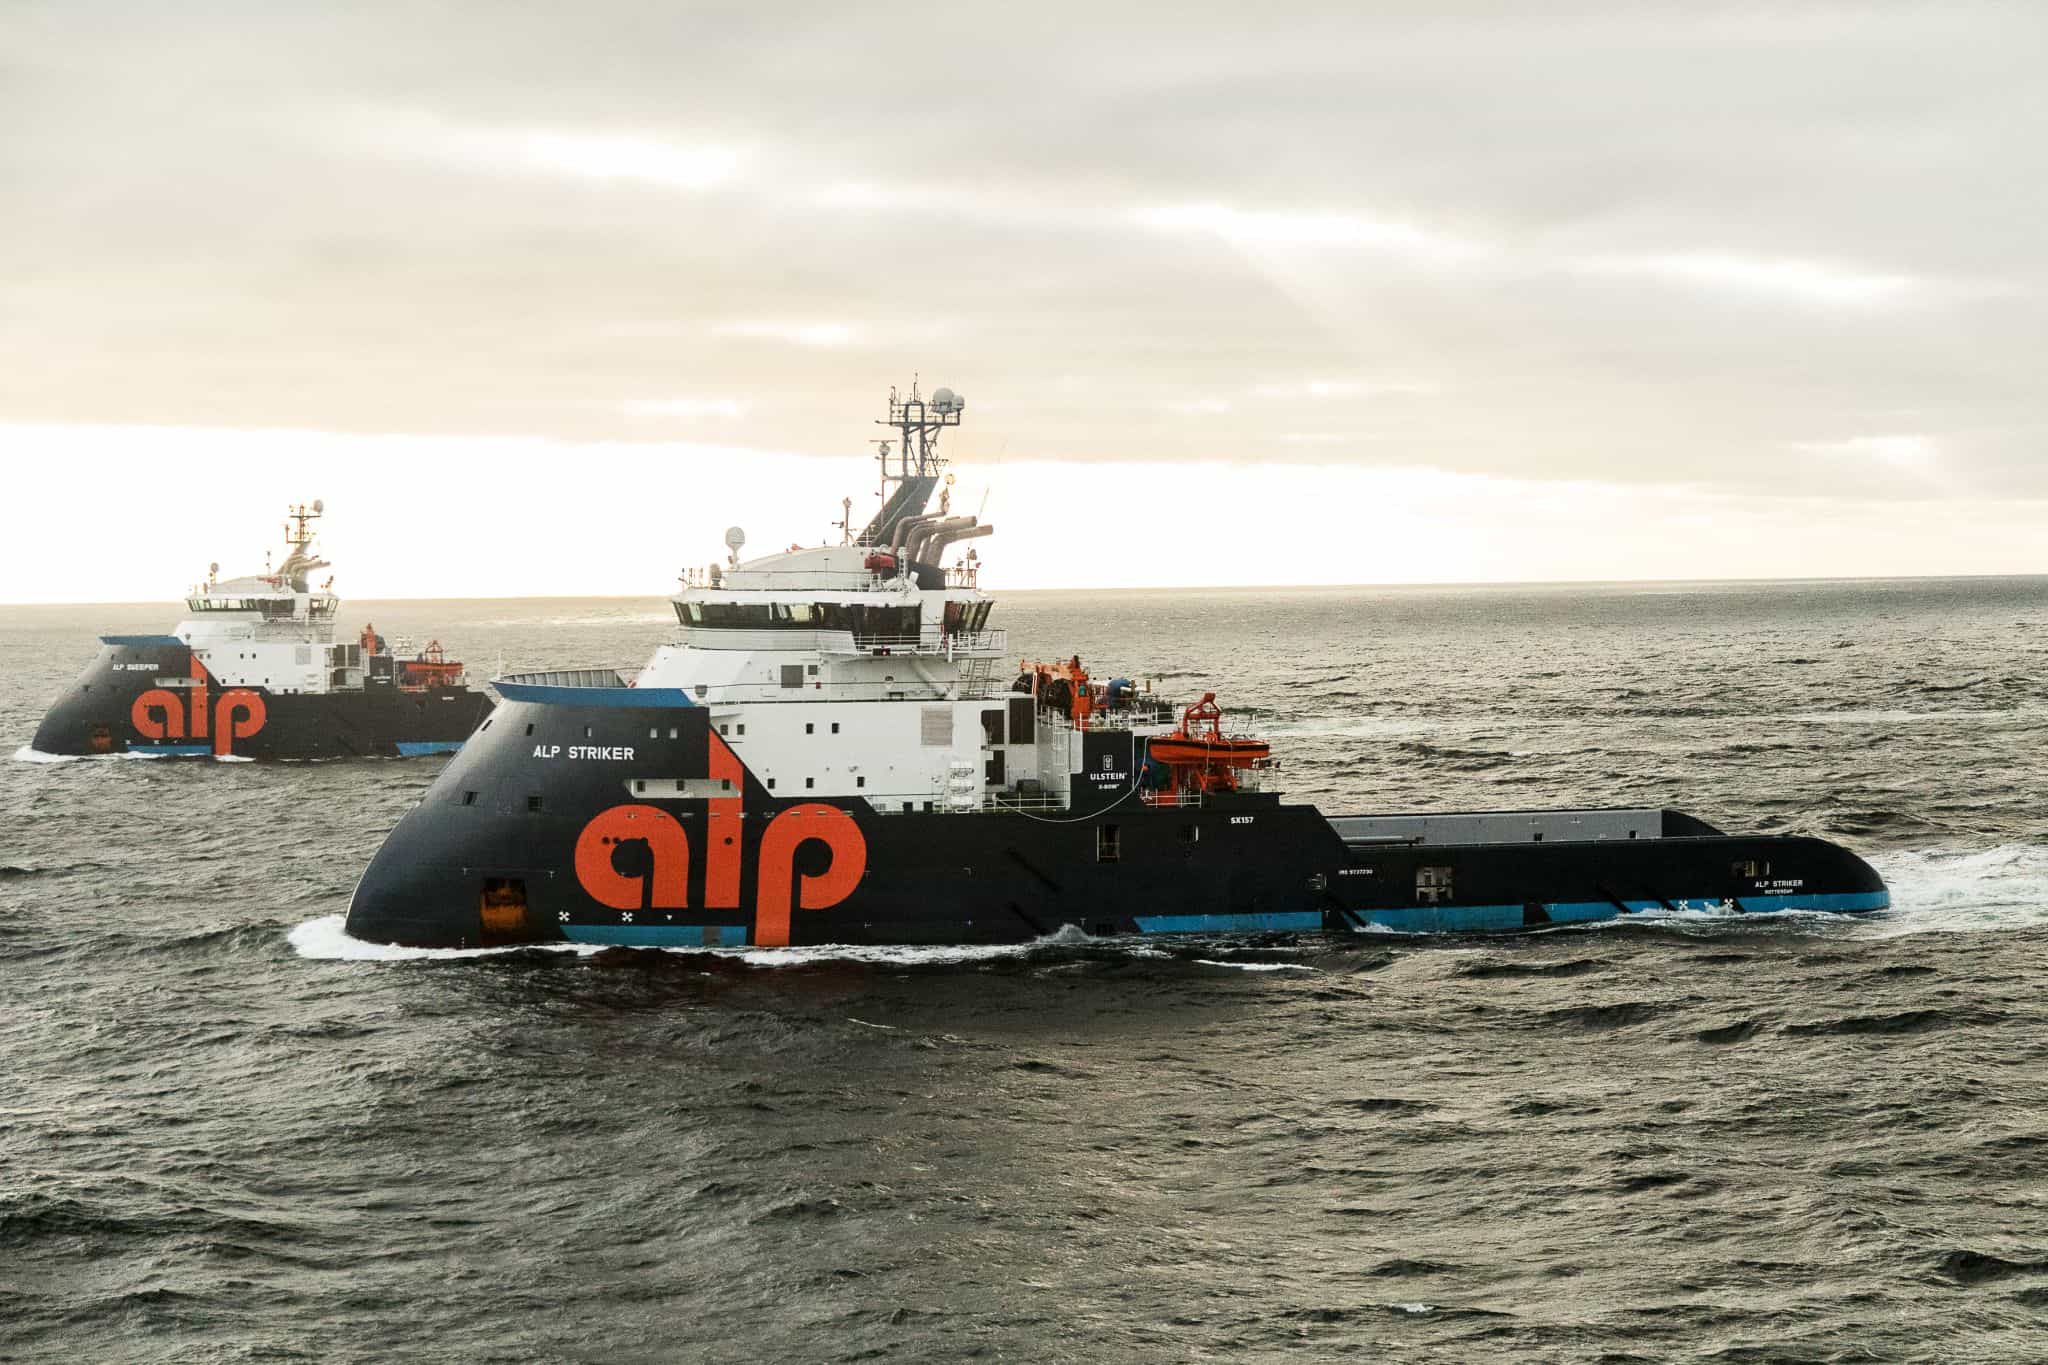 ALP Sweeper and Striker vessels; Source: Ocean Installer